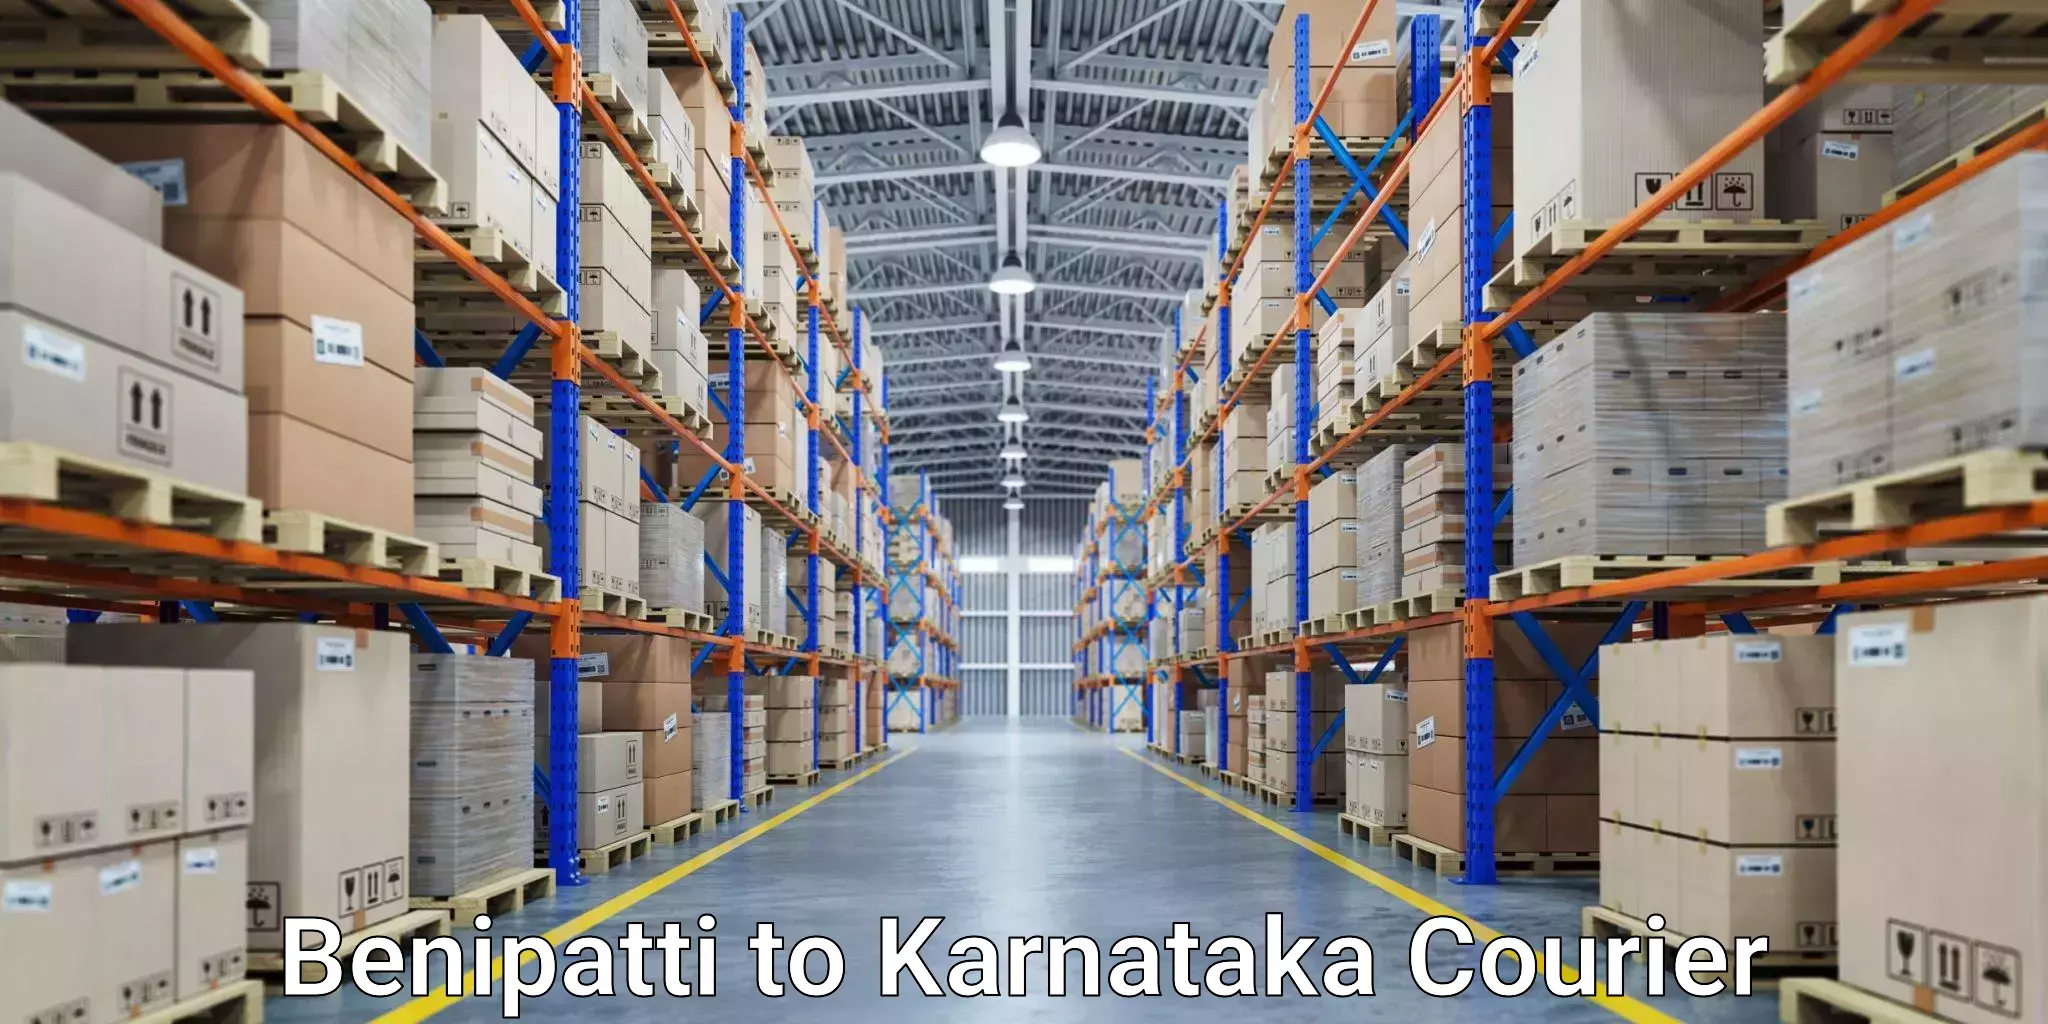 Courier service innovation Benipatti to Karnataka